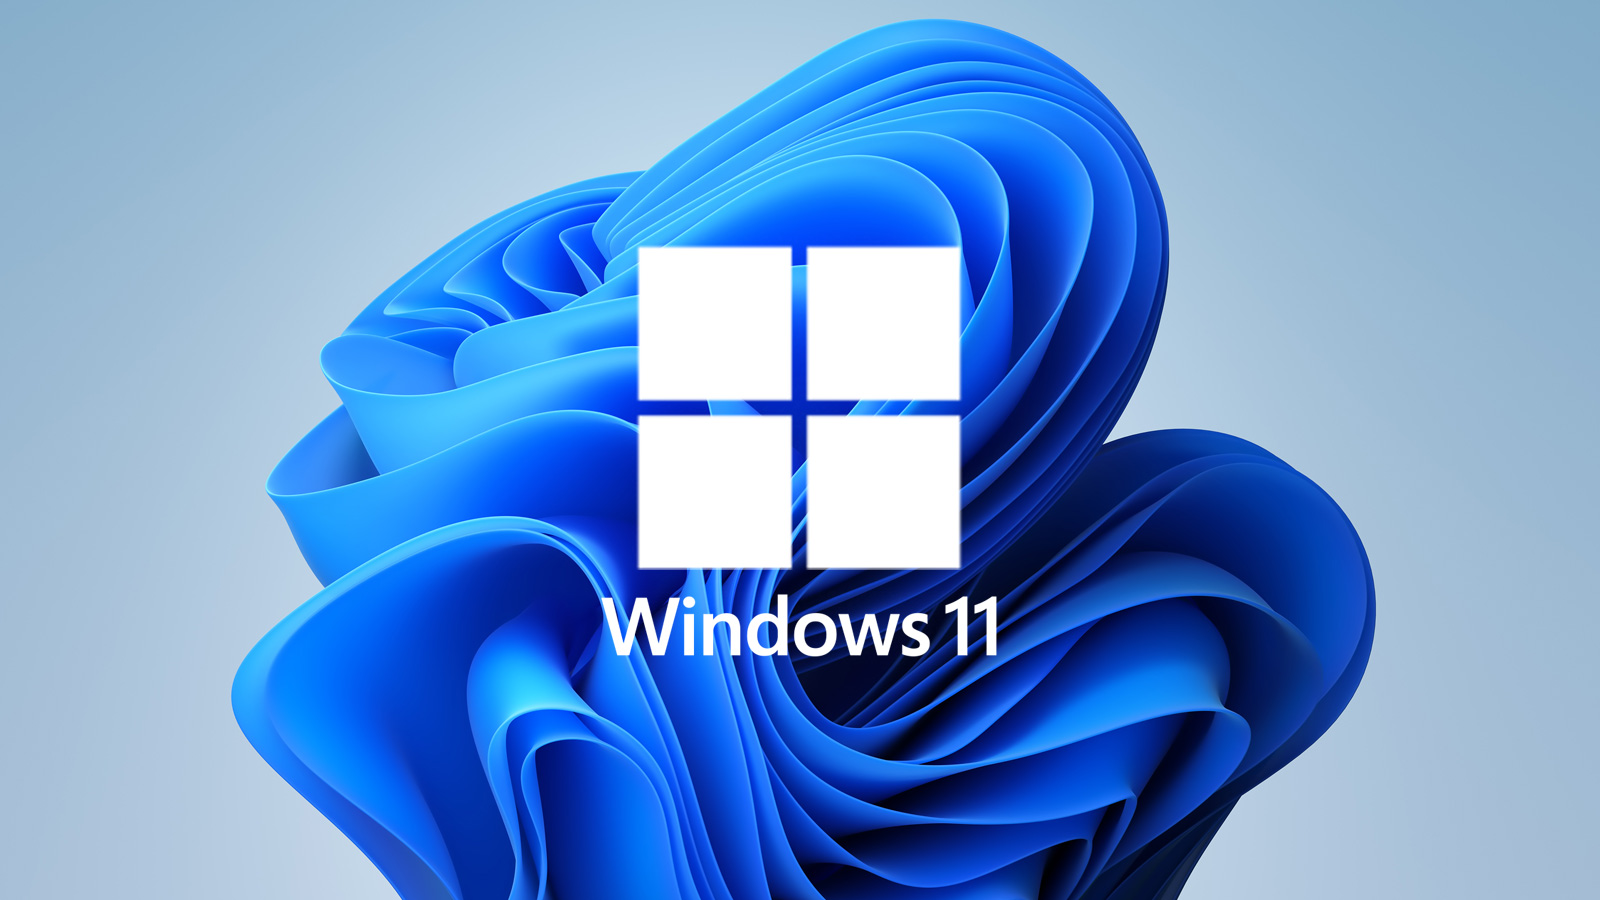 How to Make a Windows 10 Bootable Usb?